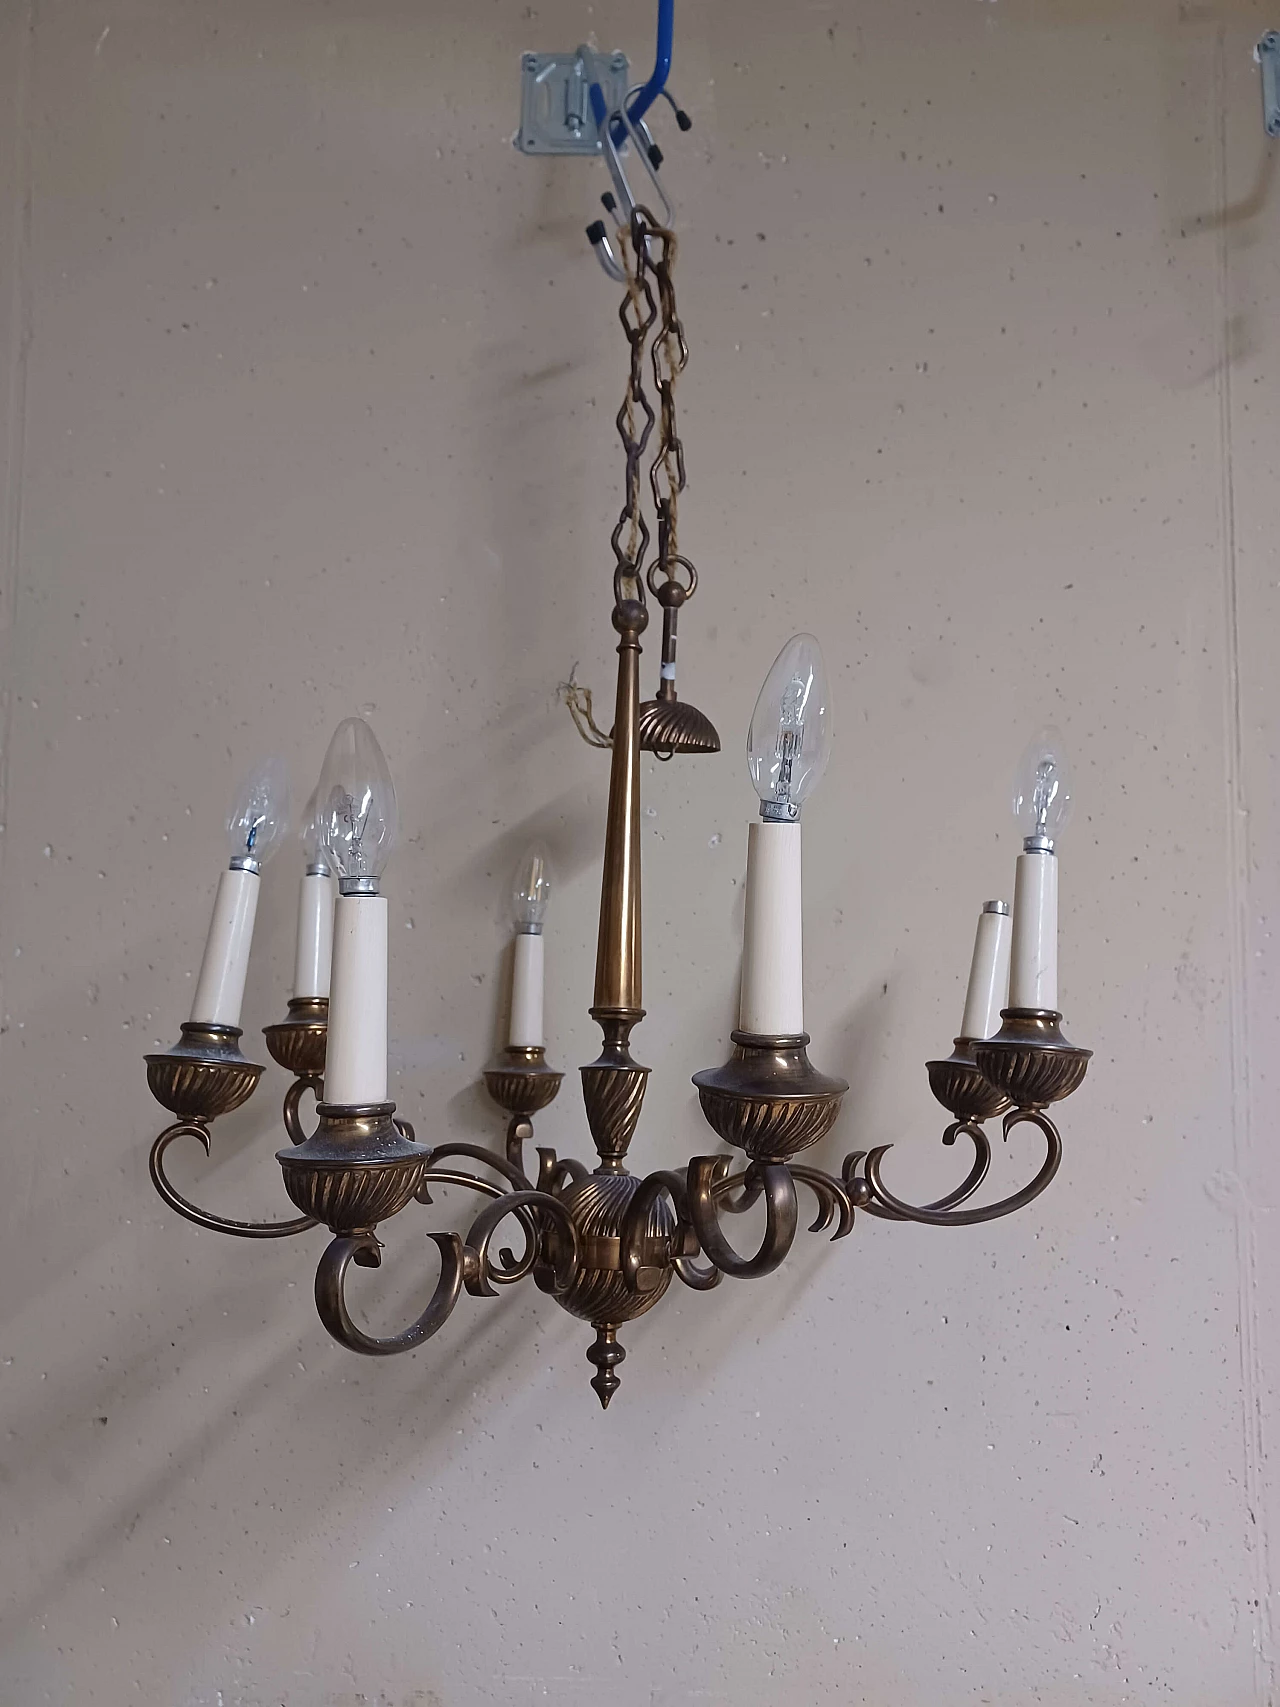 3 Bronze and brass chandeliers, 1950s 1343501